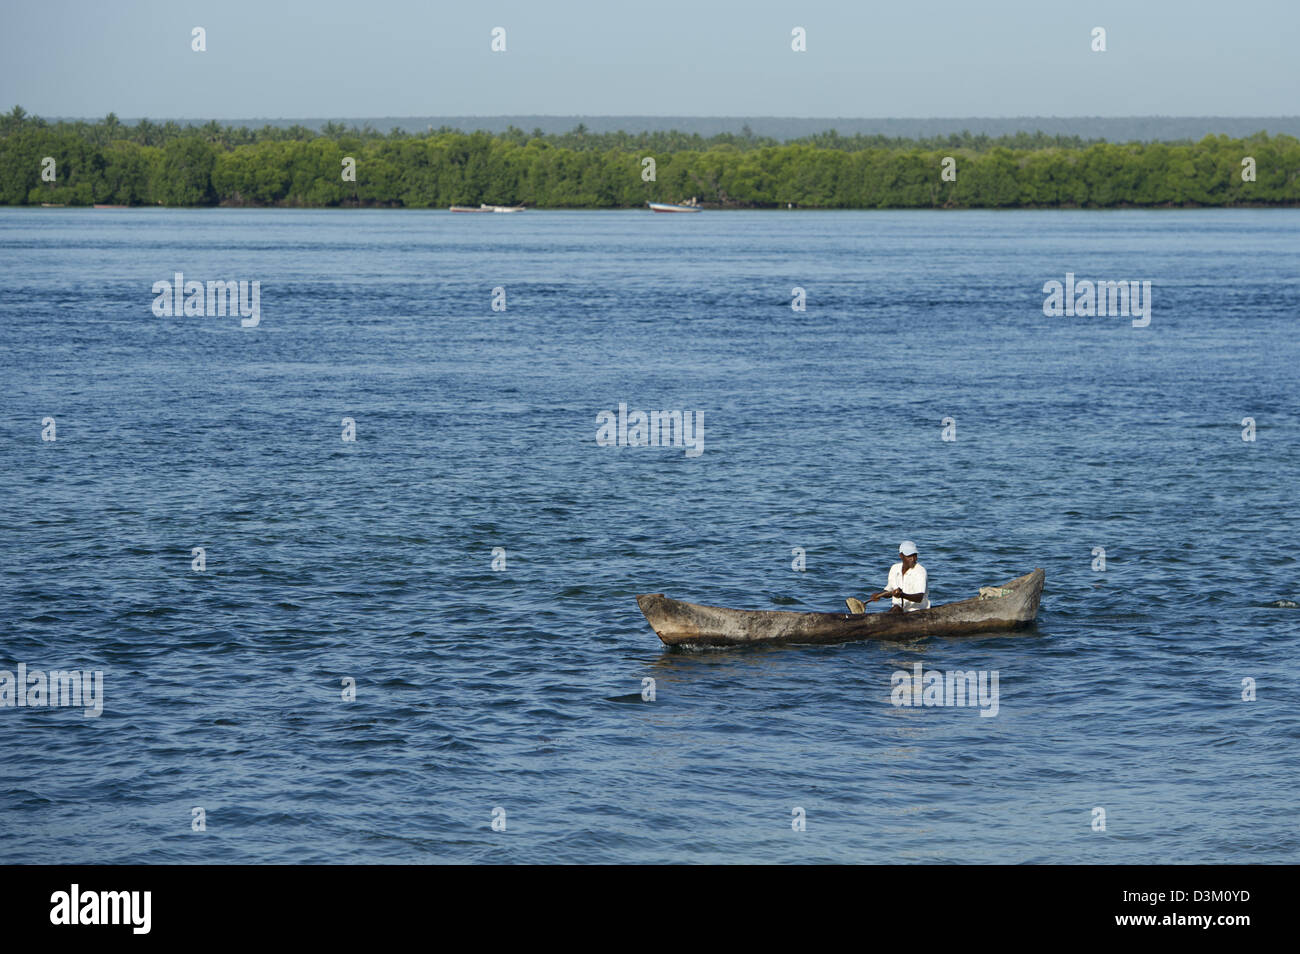 Dugout canoe, Turtle Bay, Watamu, Kenya Stock Photo